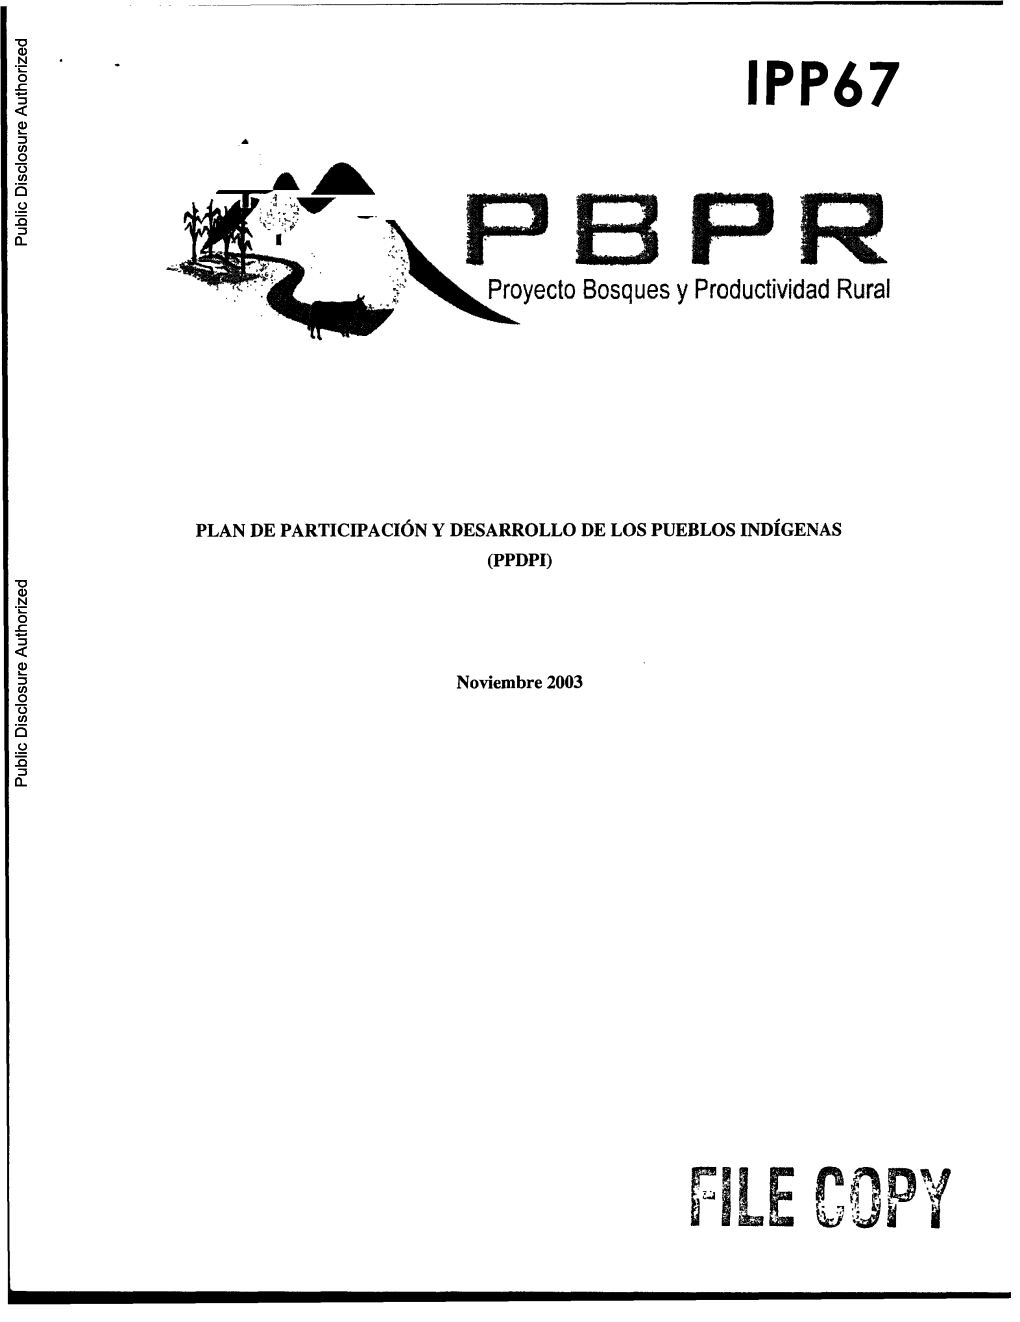 IPP67 Public Disclosure Authorized Proyecto Bosques Y Productividad Rural